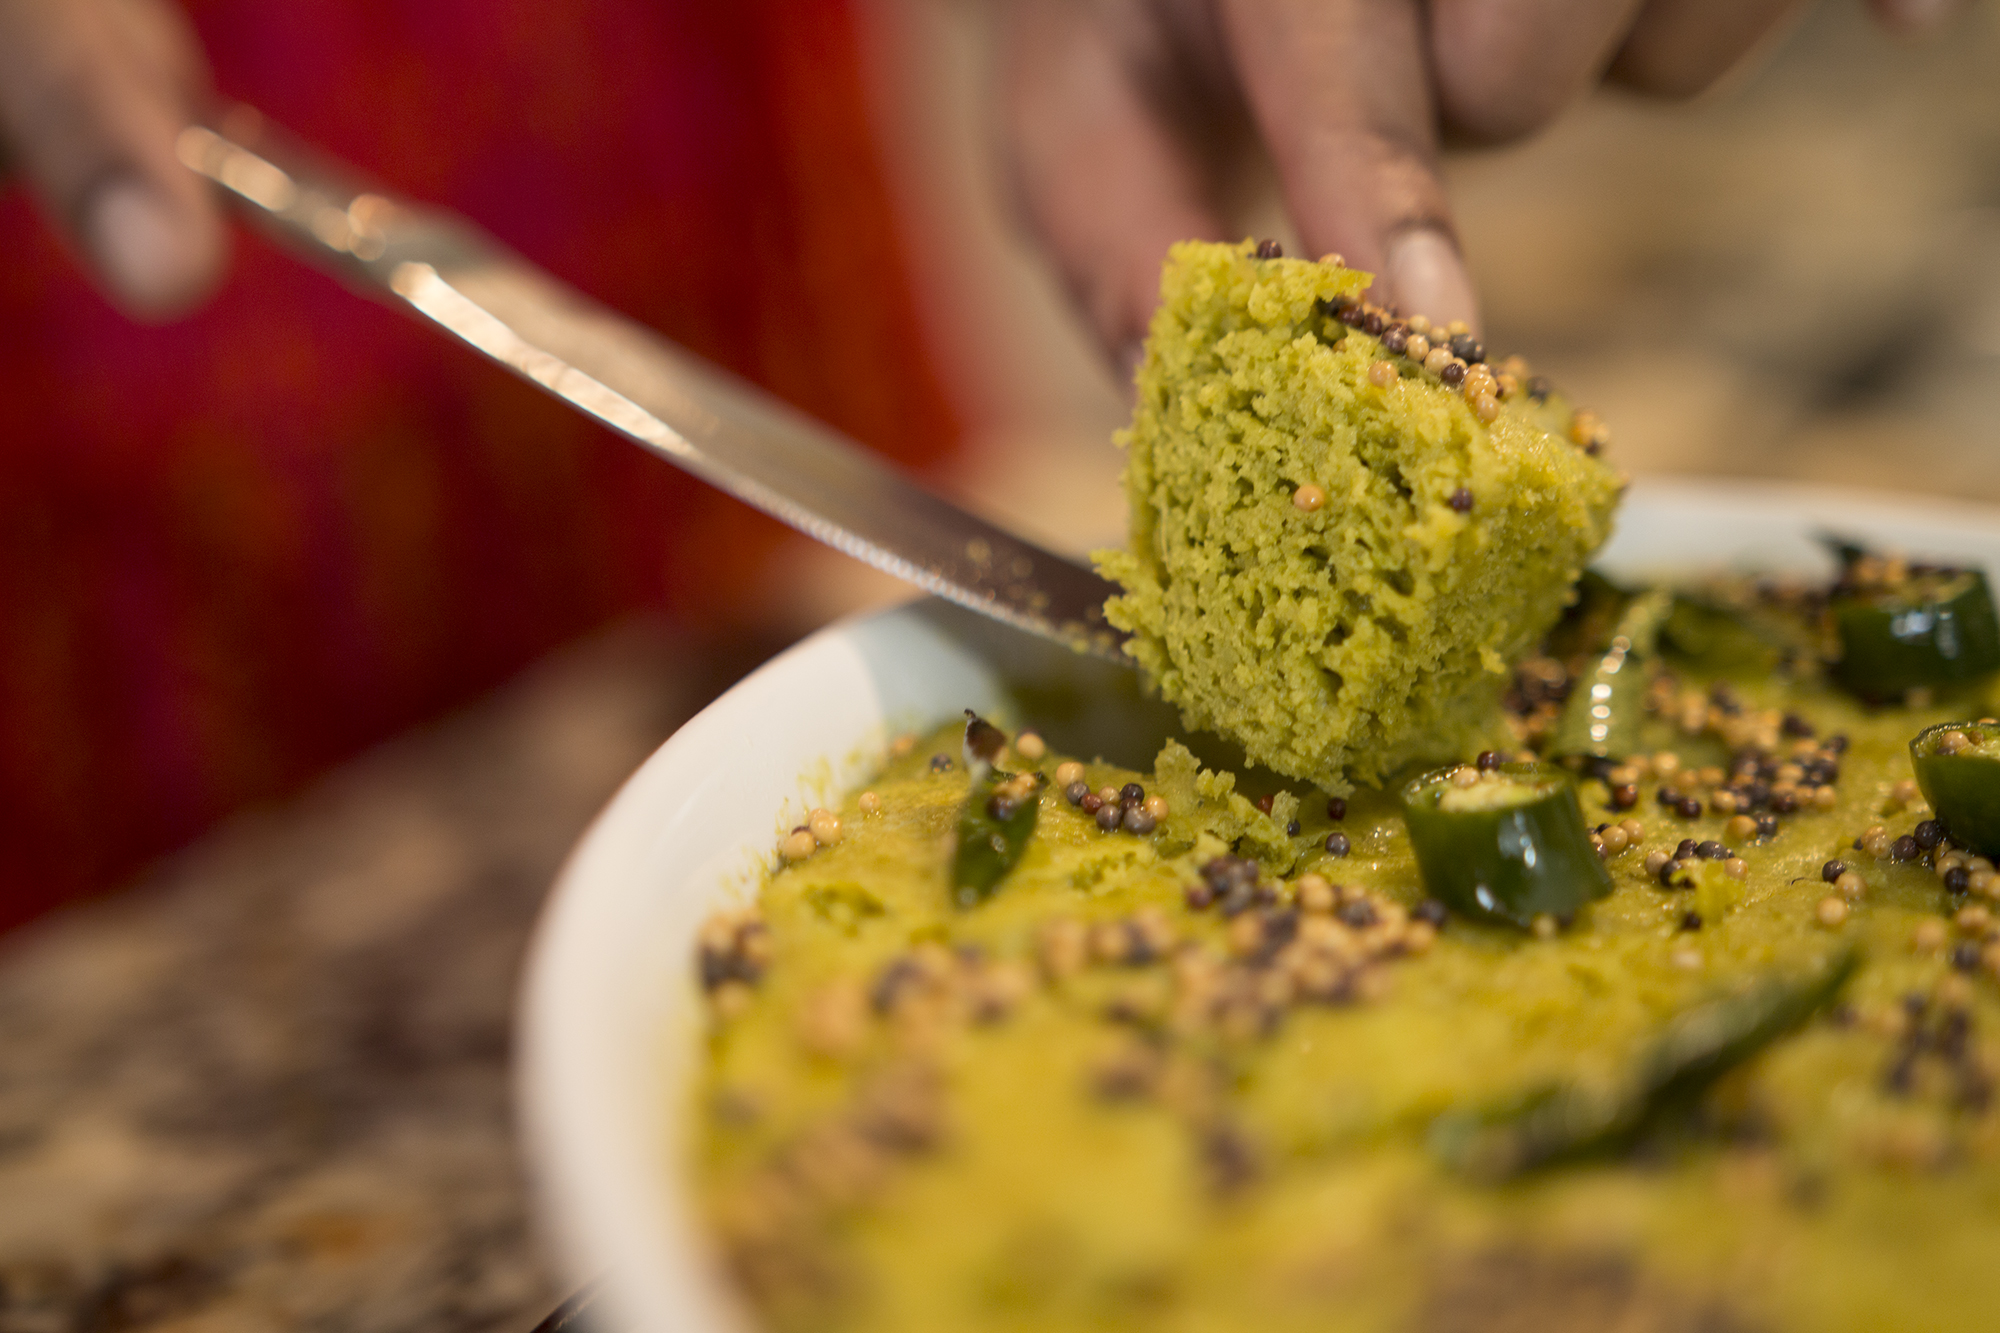 Srimukhi Xxx Coms - Finger Lickin' Cauldron Curry - Kravings Food Adventures